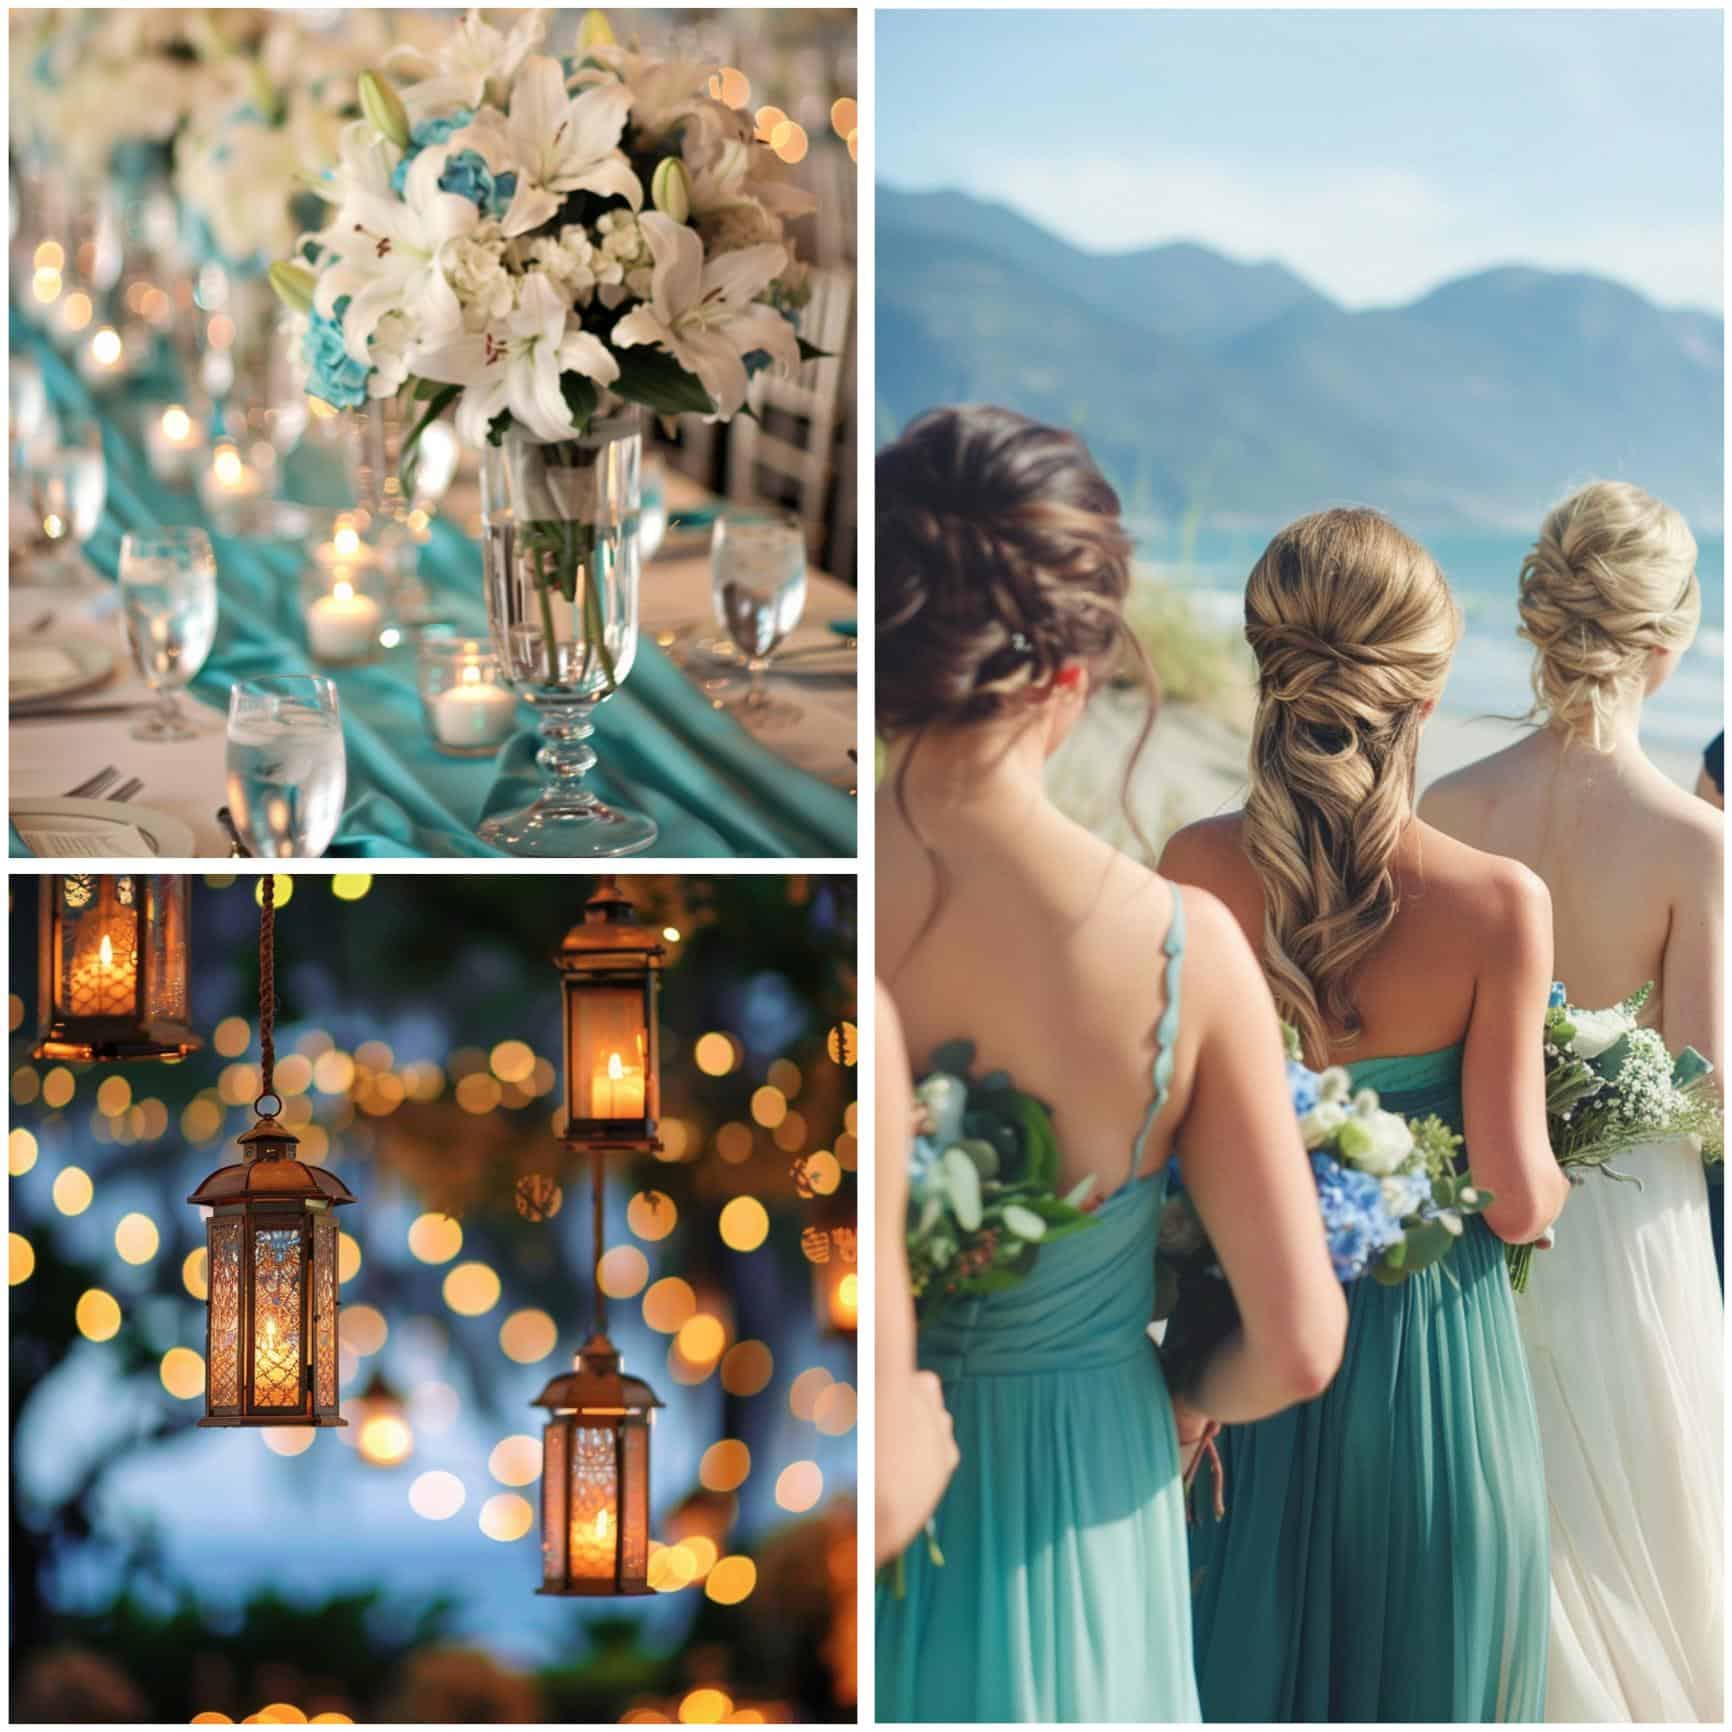 blue and green wedding theme ideas for seaside affair